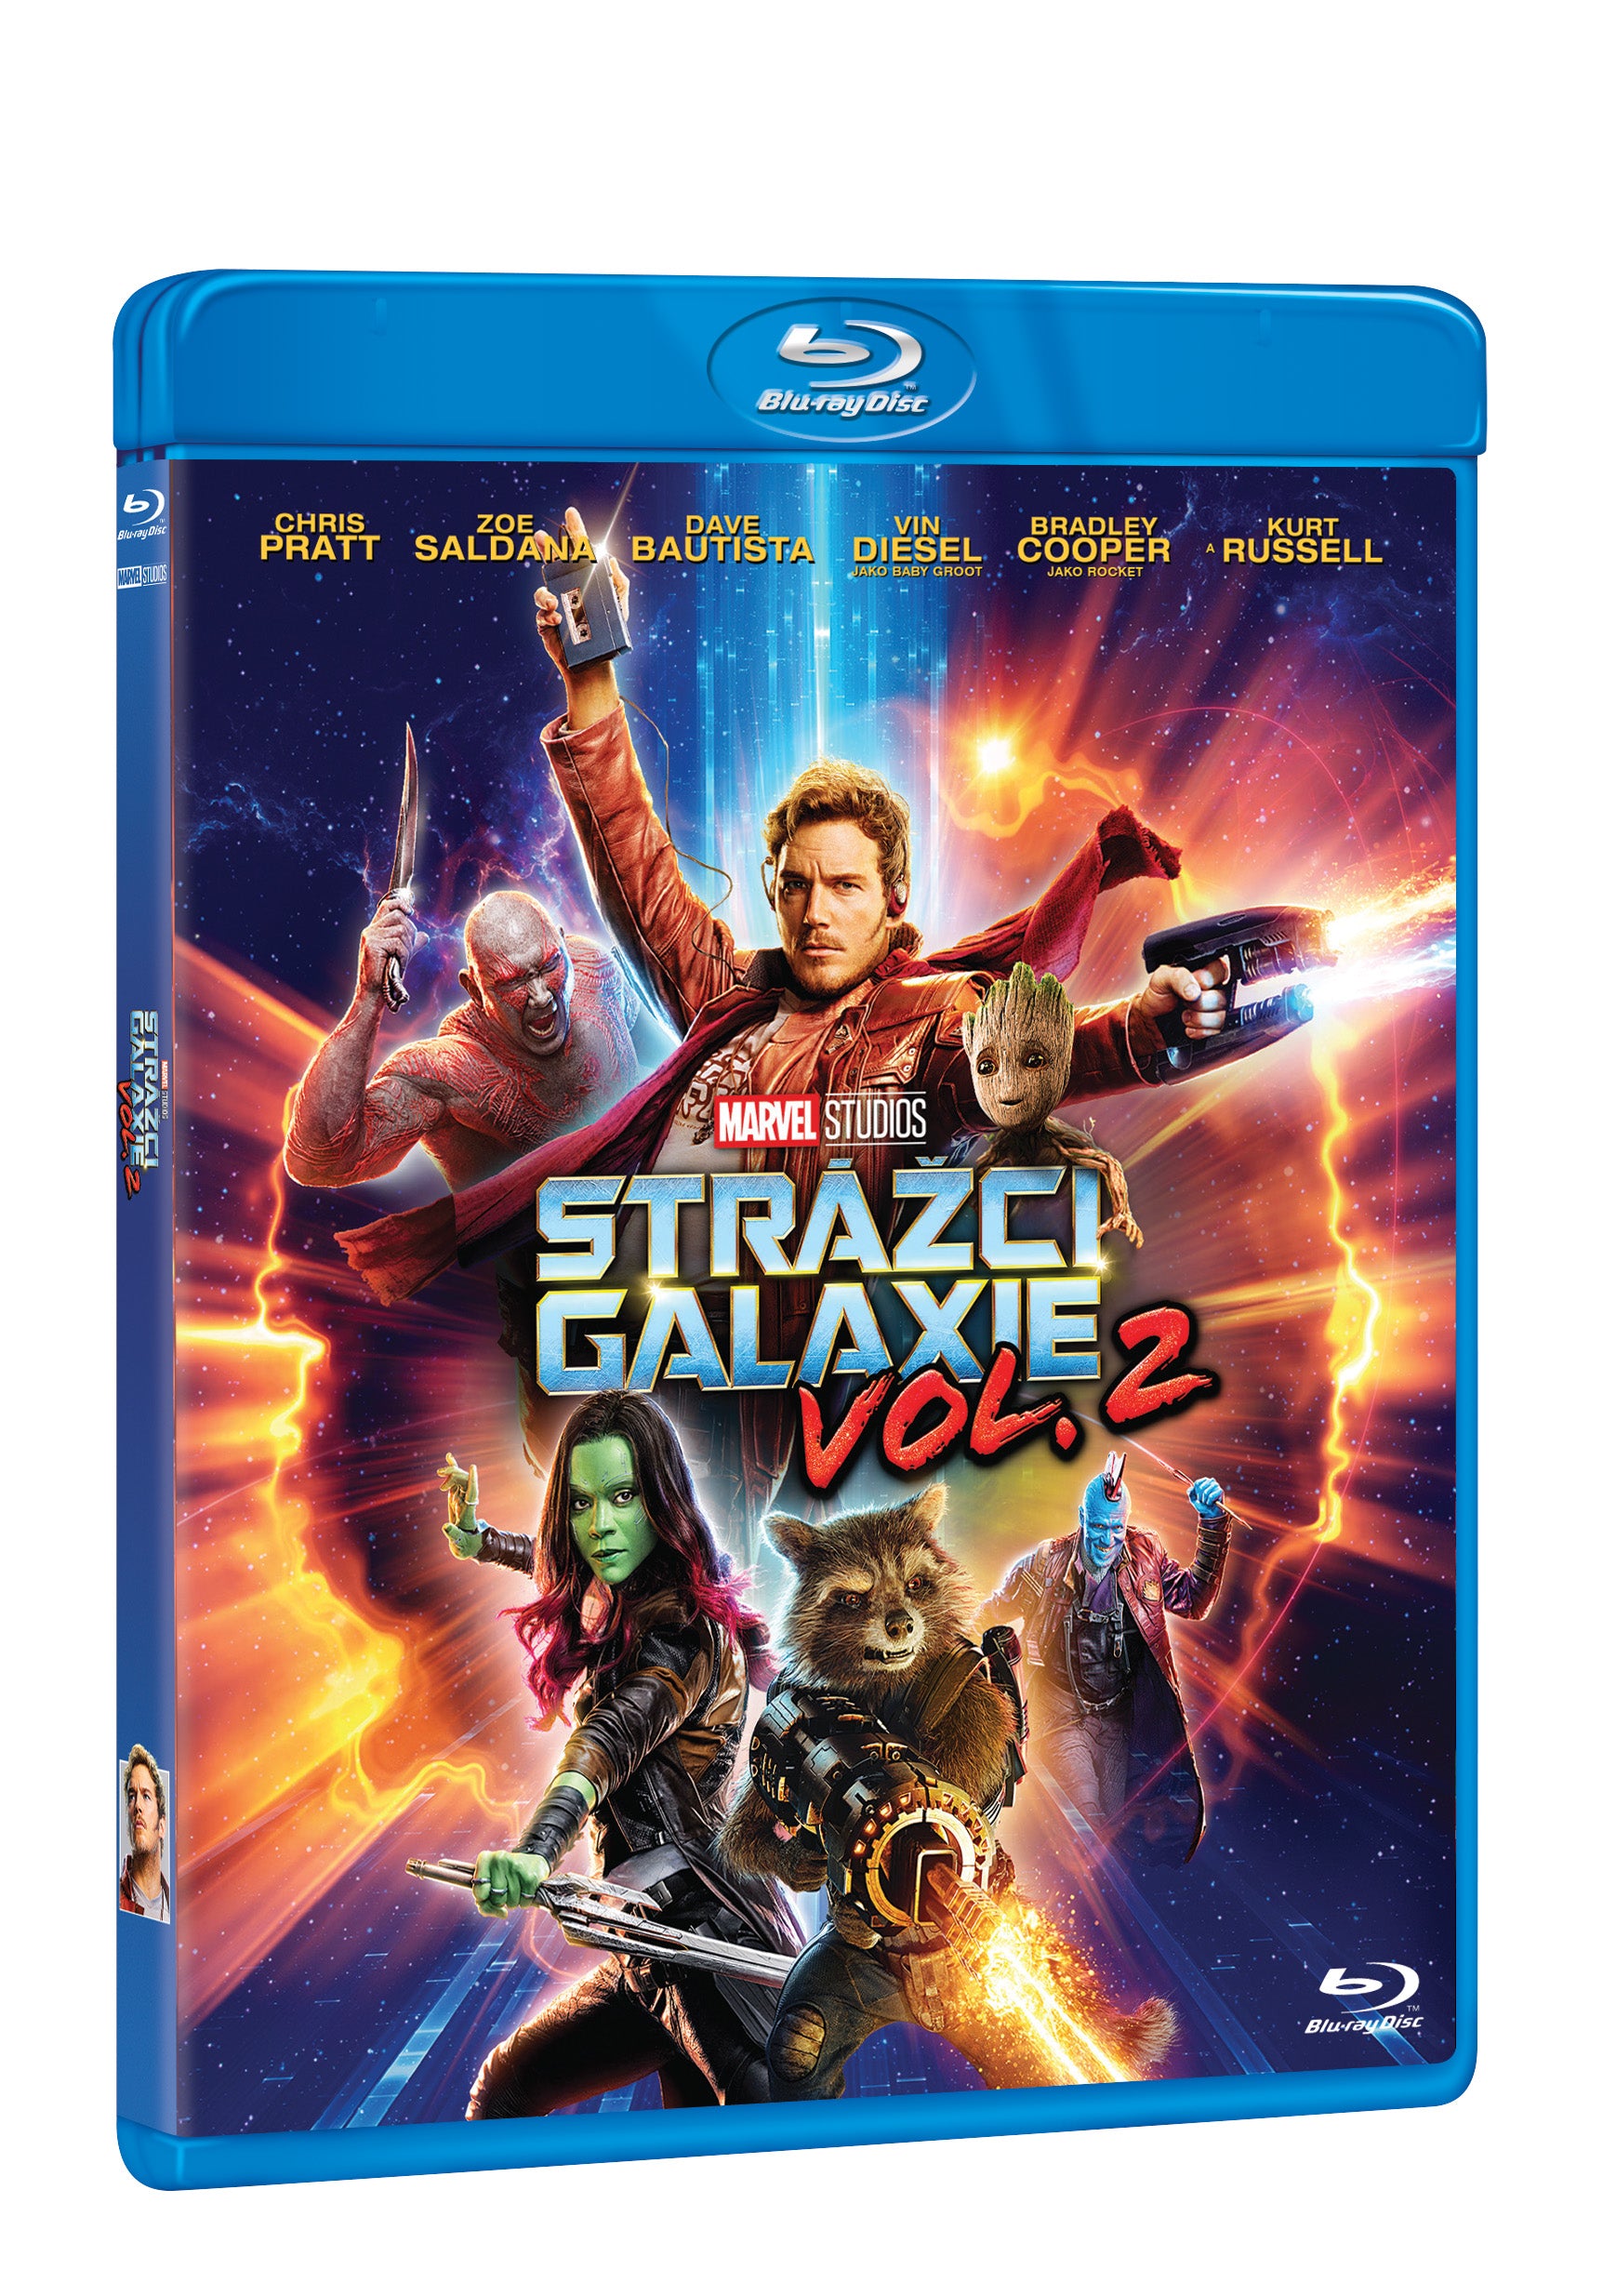 Strazci Galaxie Vol. 2 BD / Guardians of the Galaxy Vol. 2 - Czech version